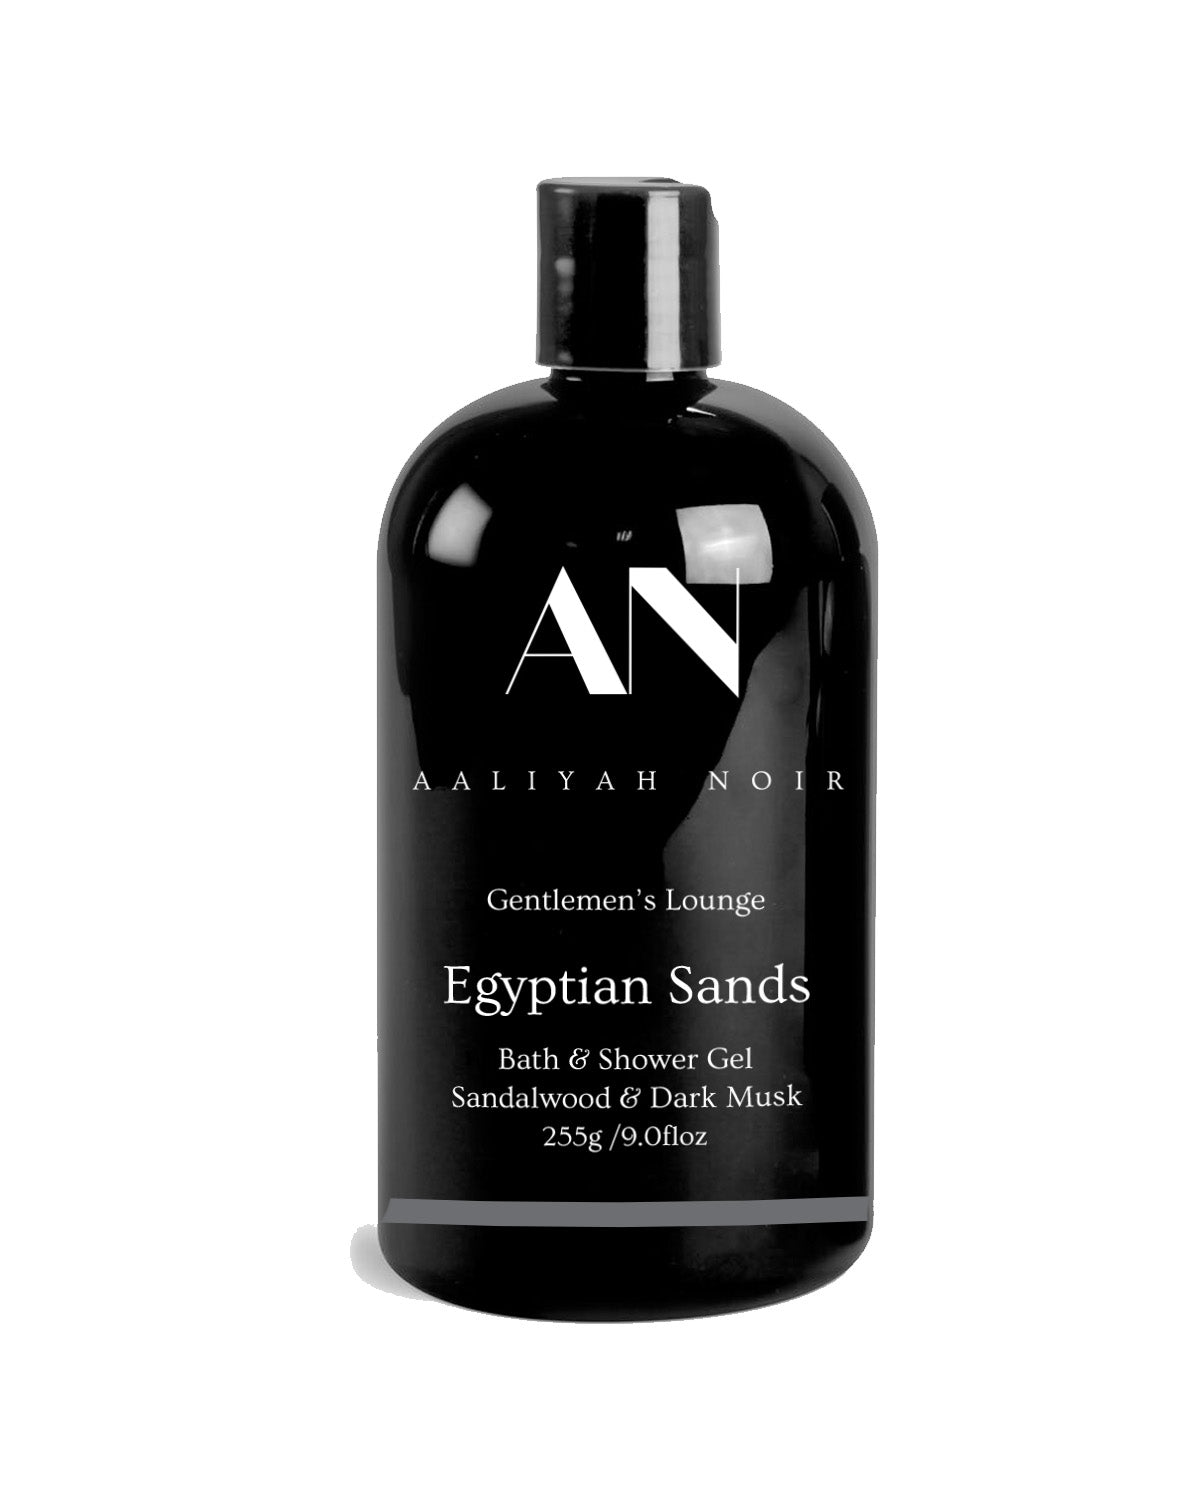 Egyptian Sands Bath & Shower Gel